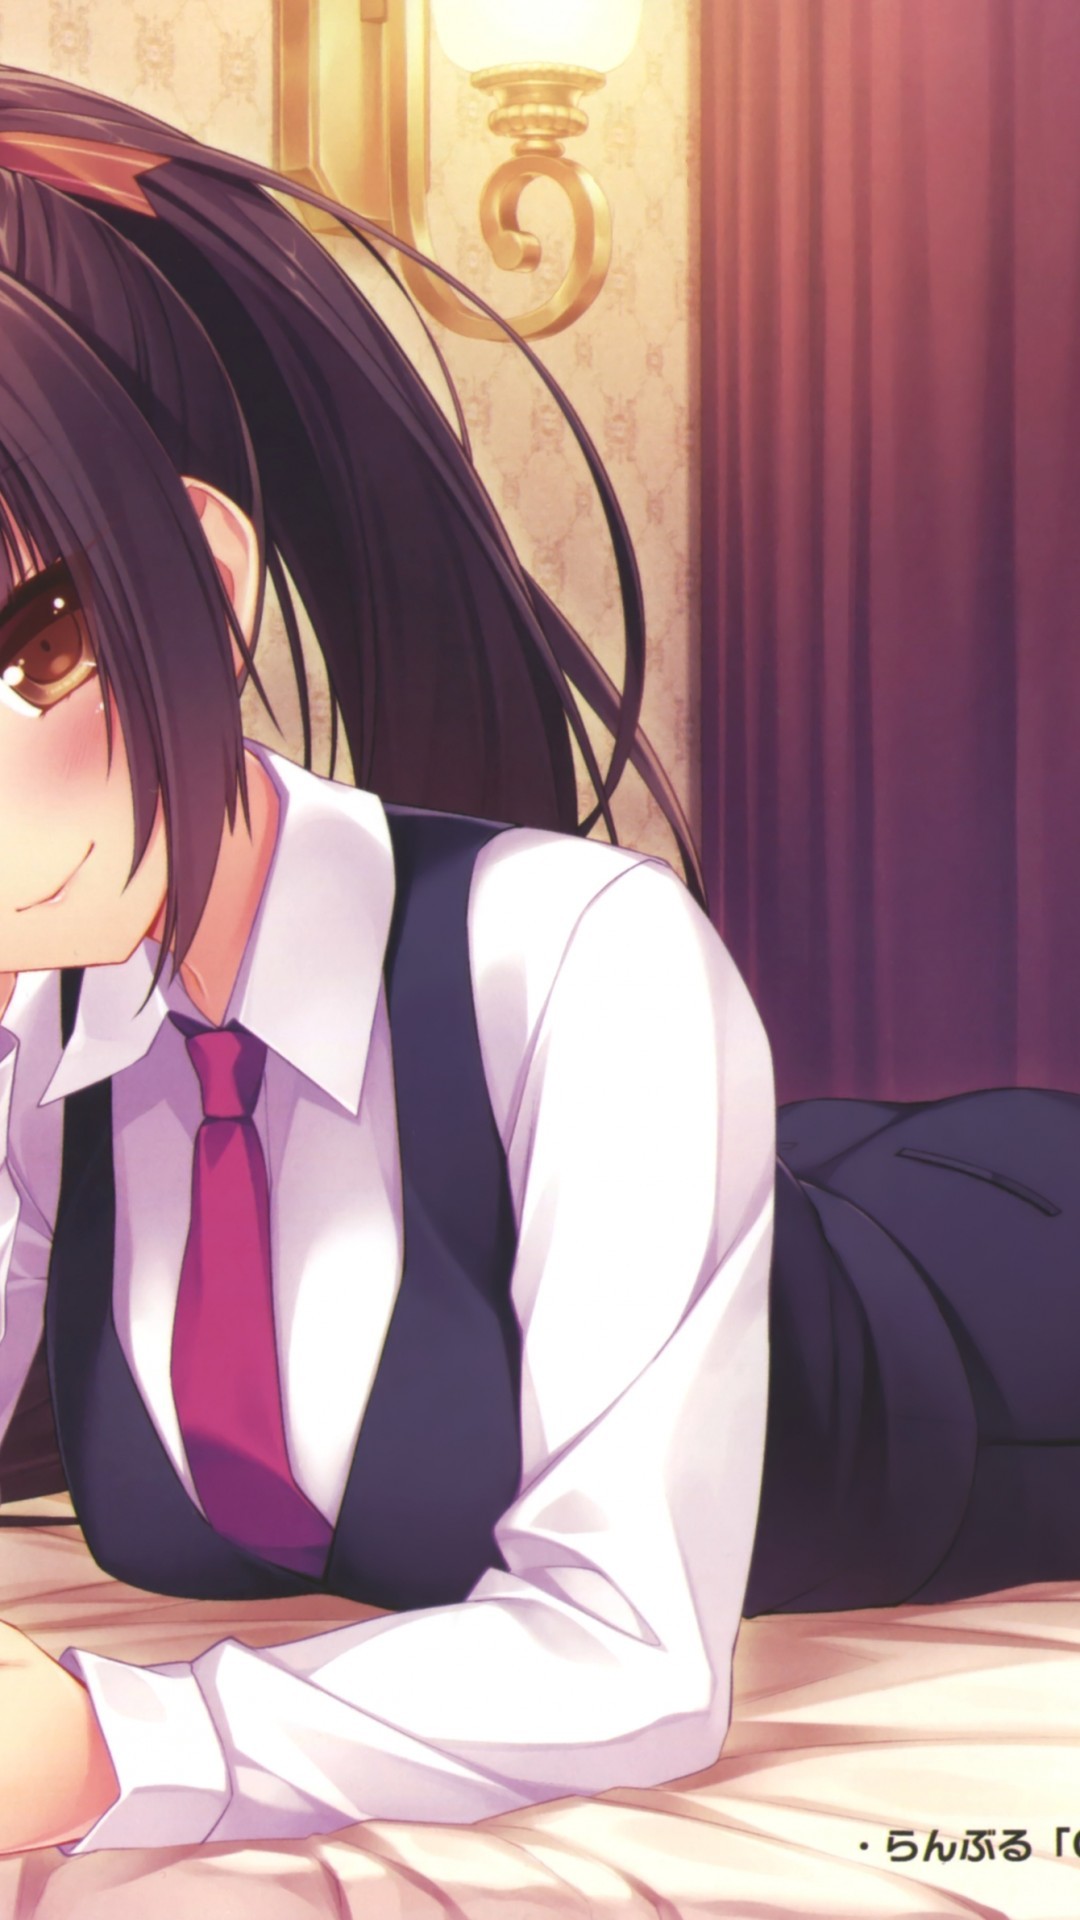 1080x1920 Anime Girl, Lying Down, Smiling, Business Women